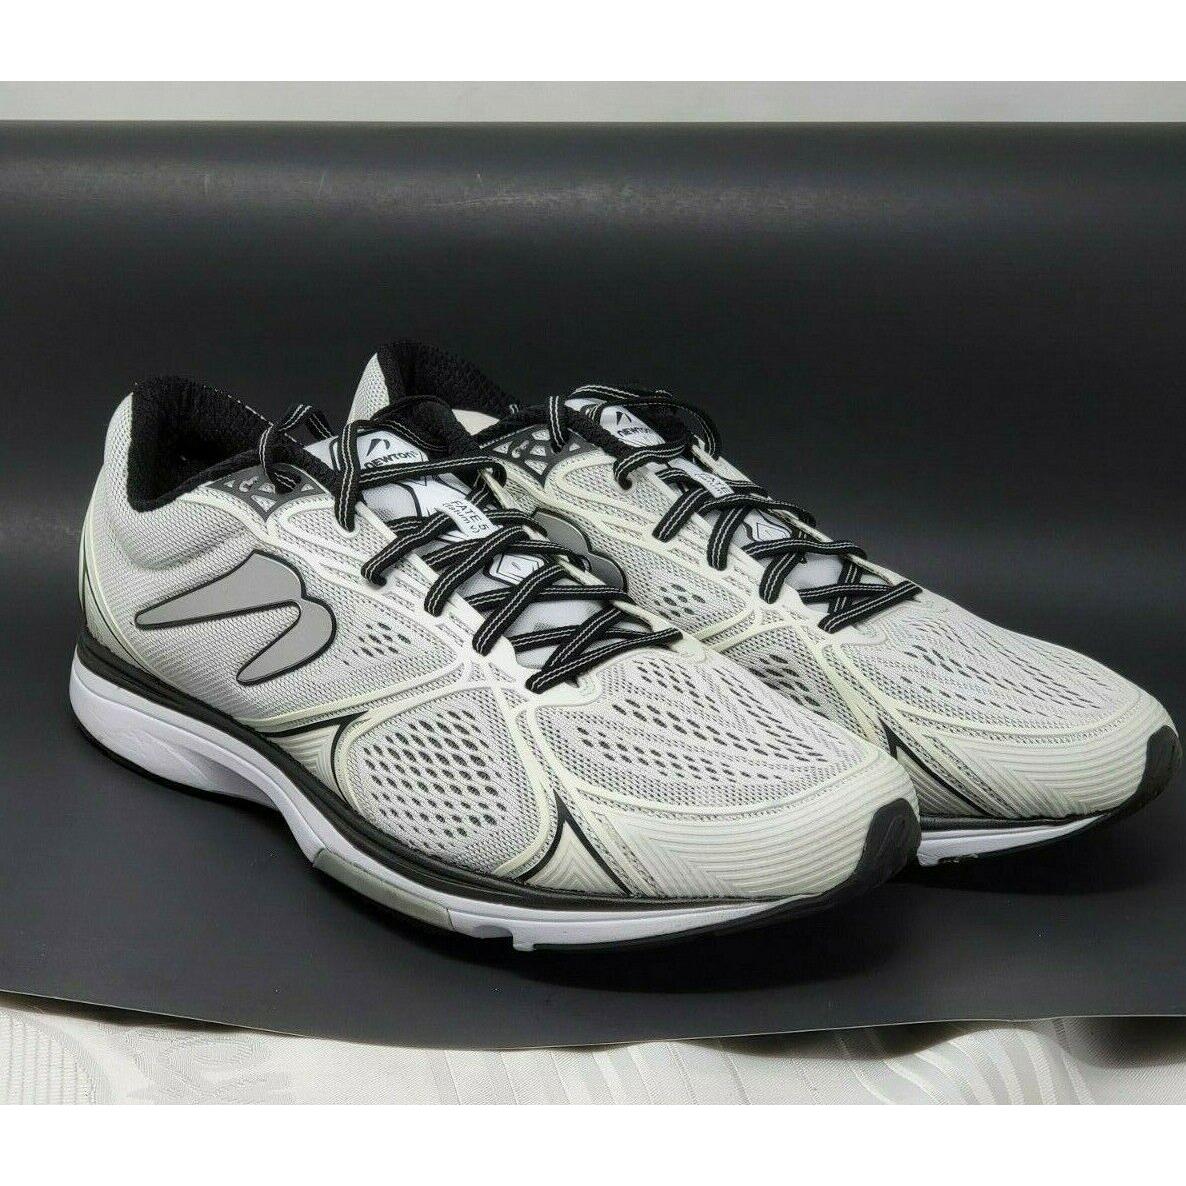 Newton Fate 5 Outdoor Jogging Training Sneaker Men Running Shoes Size 14